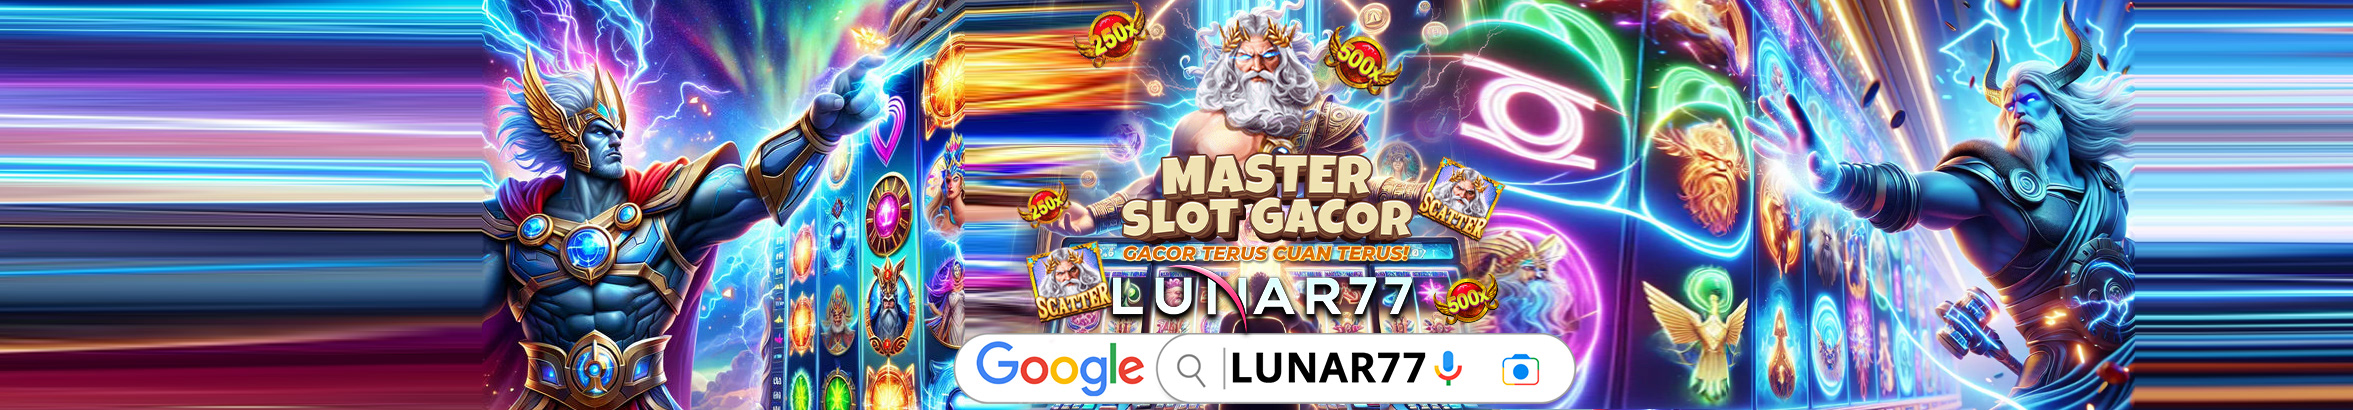 Lunar77 Slot Gacor's profile banner